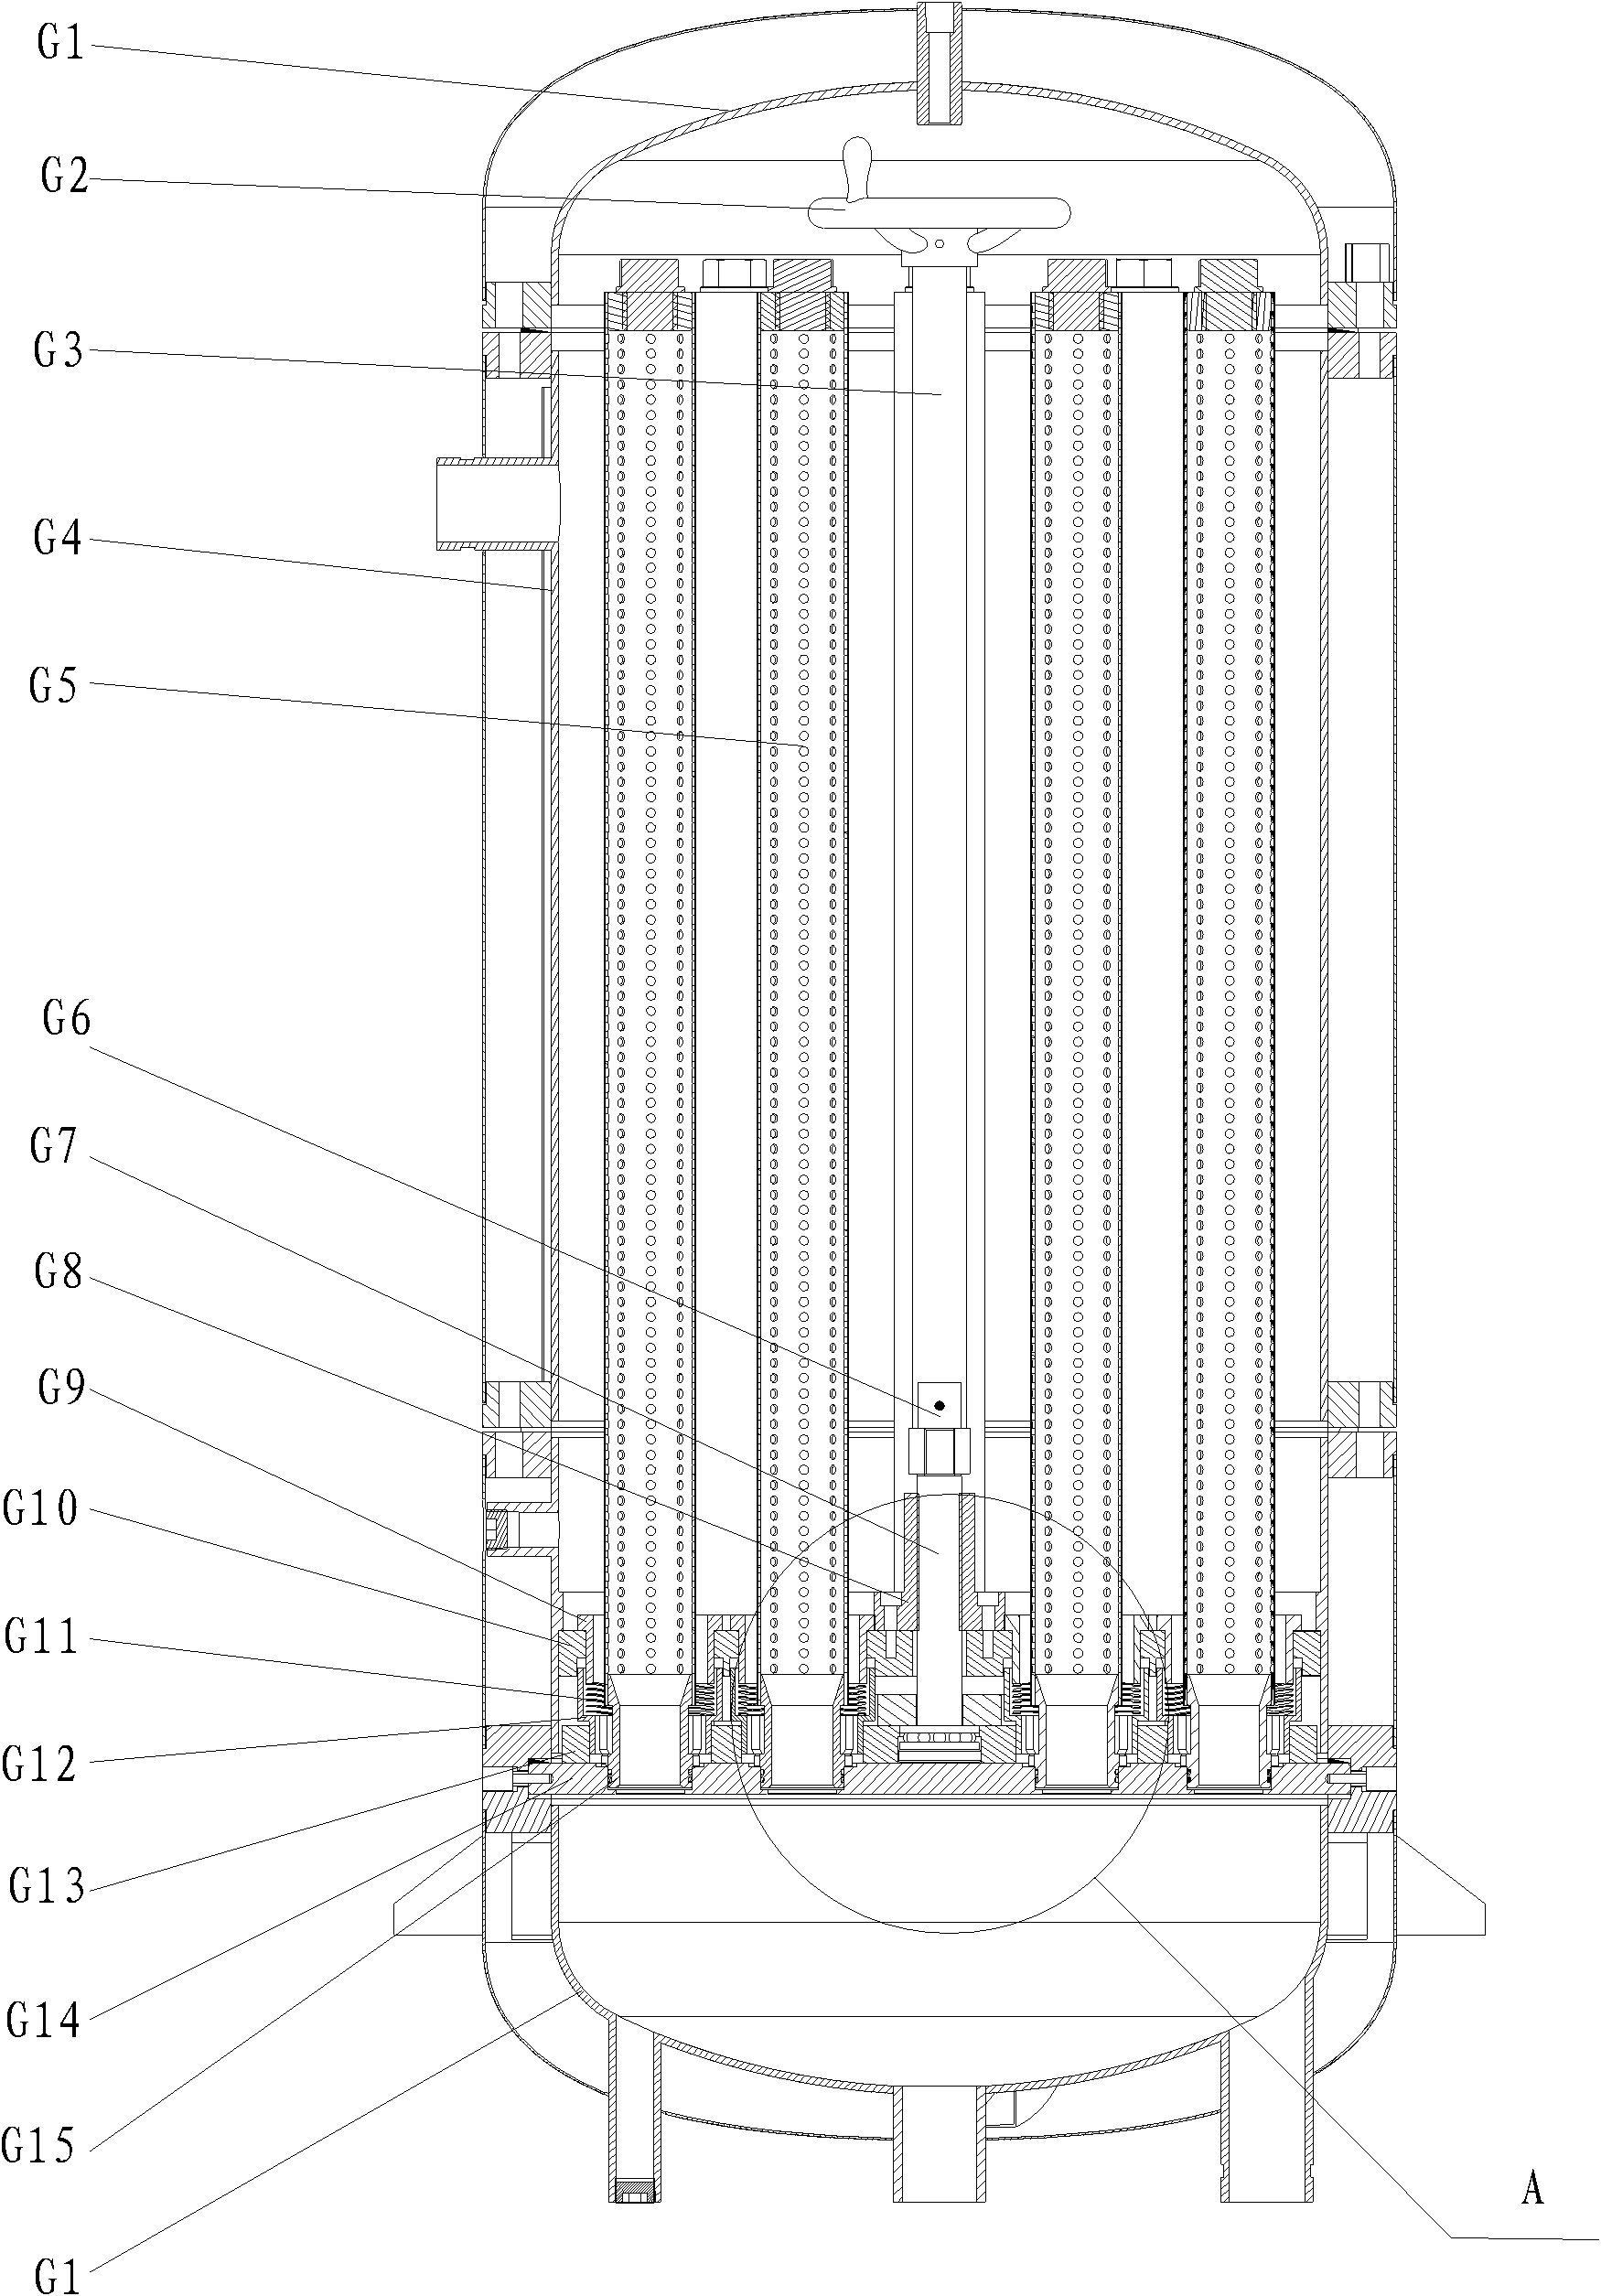 Control system for high-precision liquid filter